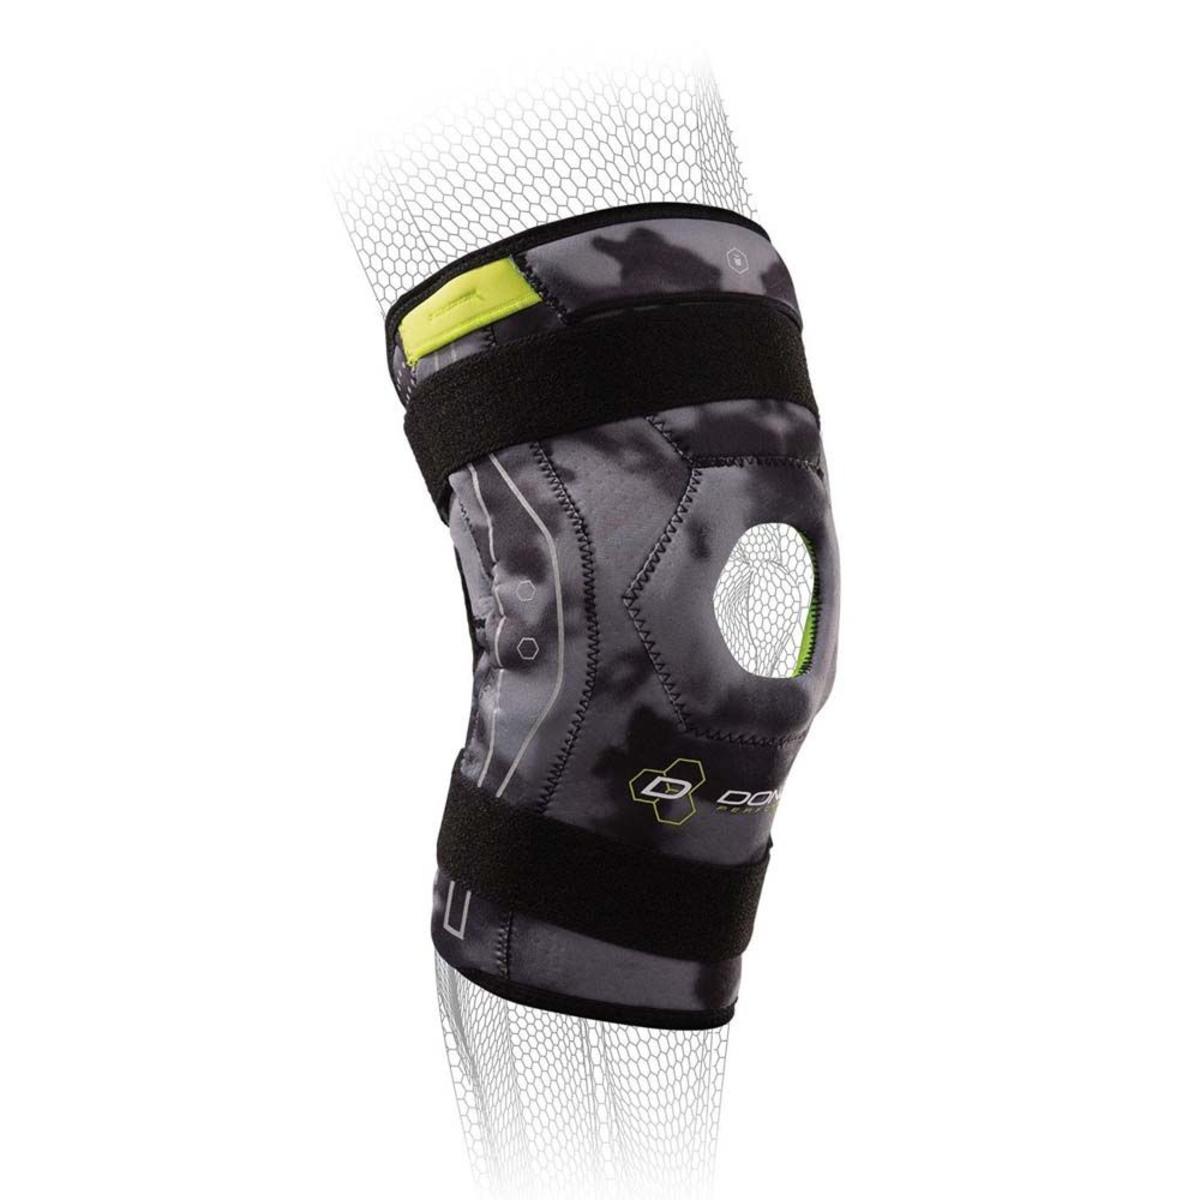 DonJoy Bionic Knee Brace Small - image 4 of 6